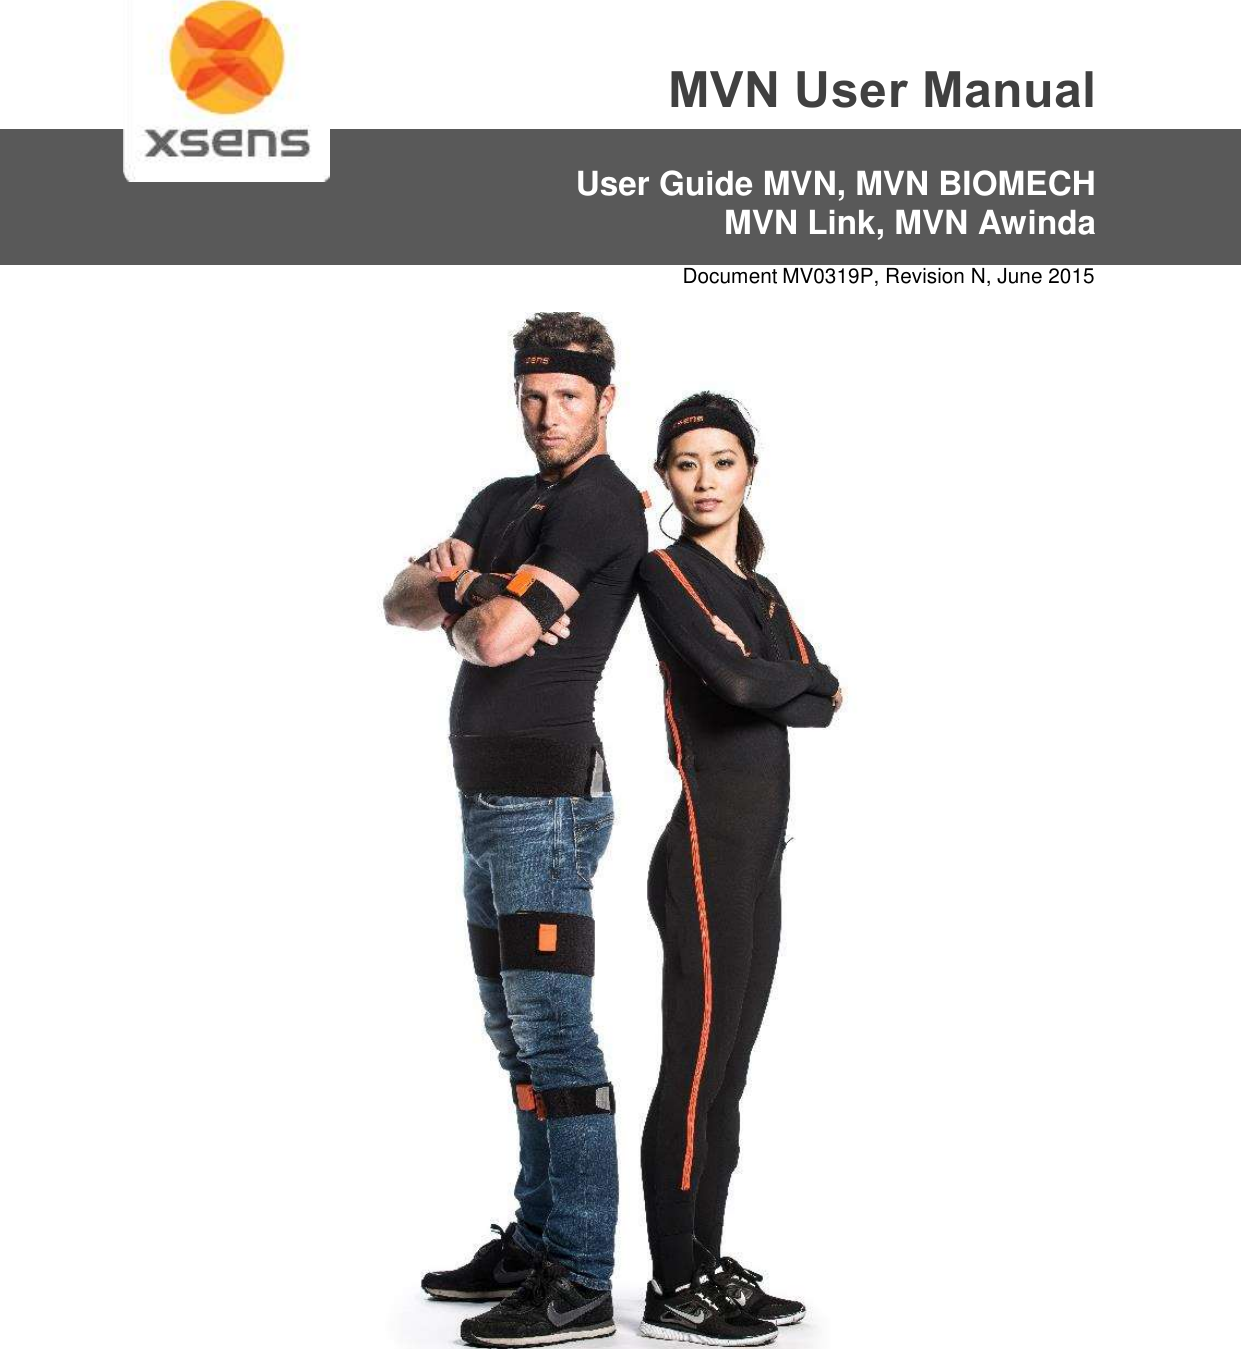        Document MV0319P, Revision N, June 2015     User Guide MVN, MVN BIOMECH MVN Link, MVN Awinda MVN User Manual 